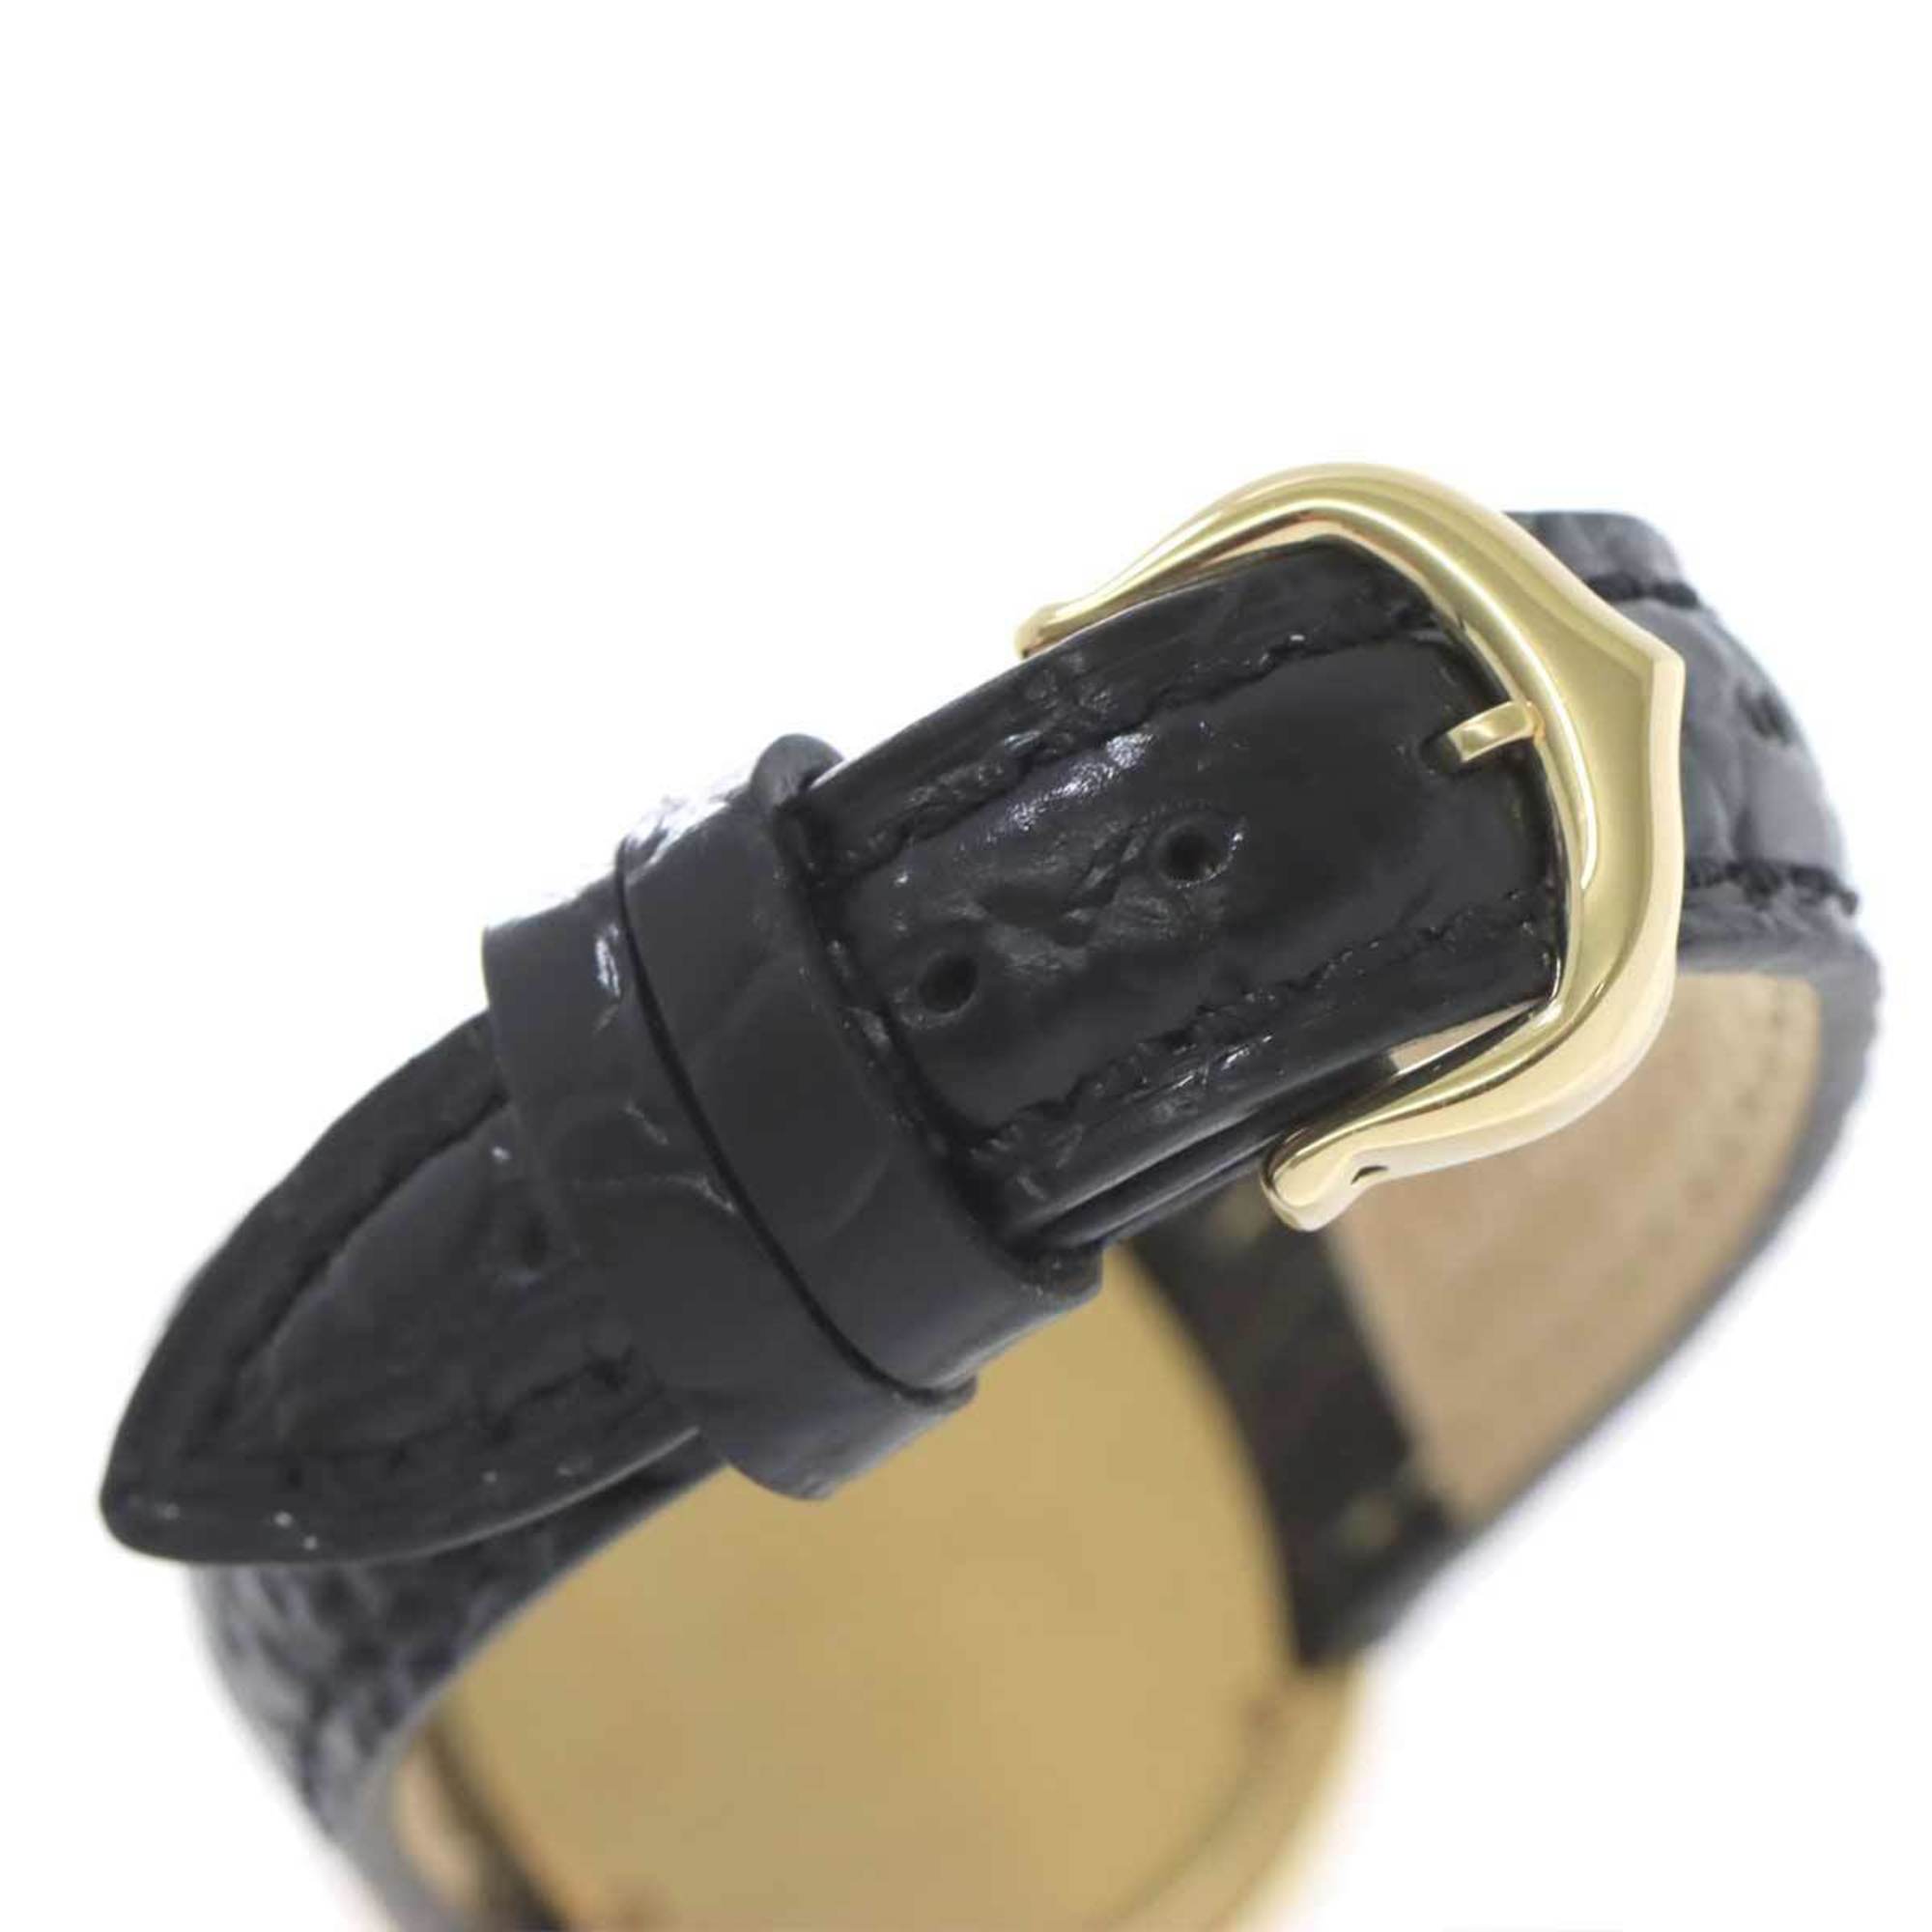 Cartier Panthere 1925 W2504556 Women's Watch Ivory Dial K18YG Yellow Gold Quartz